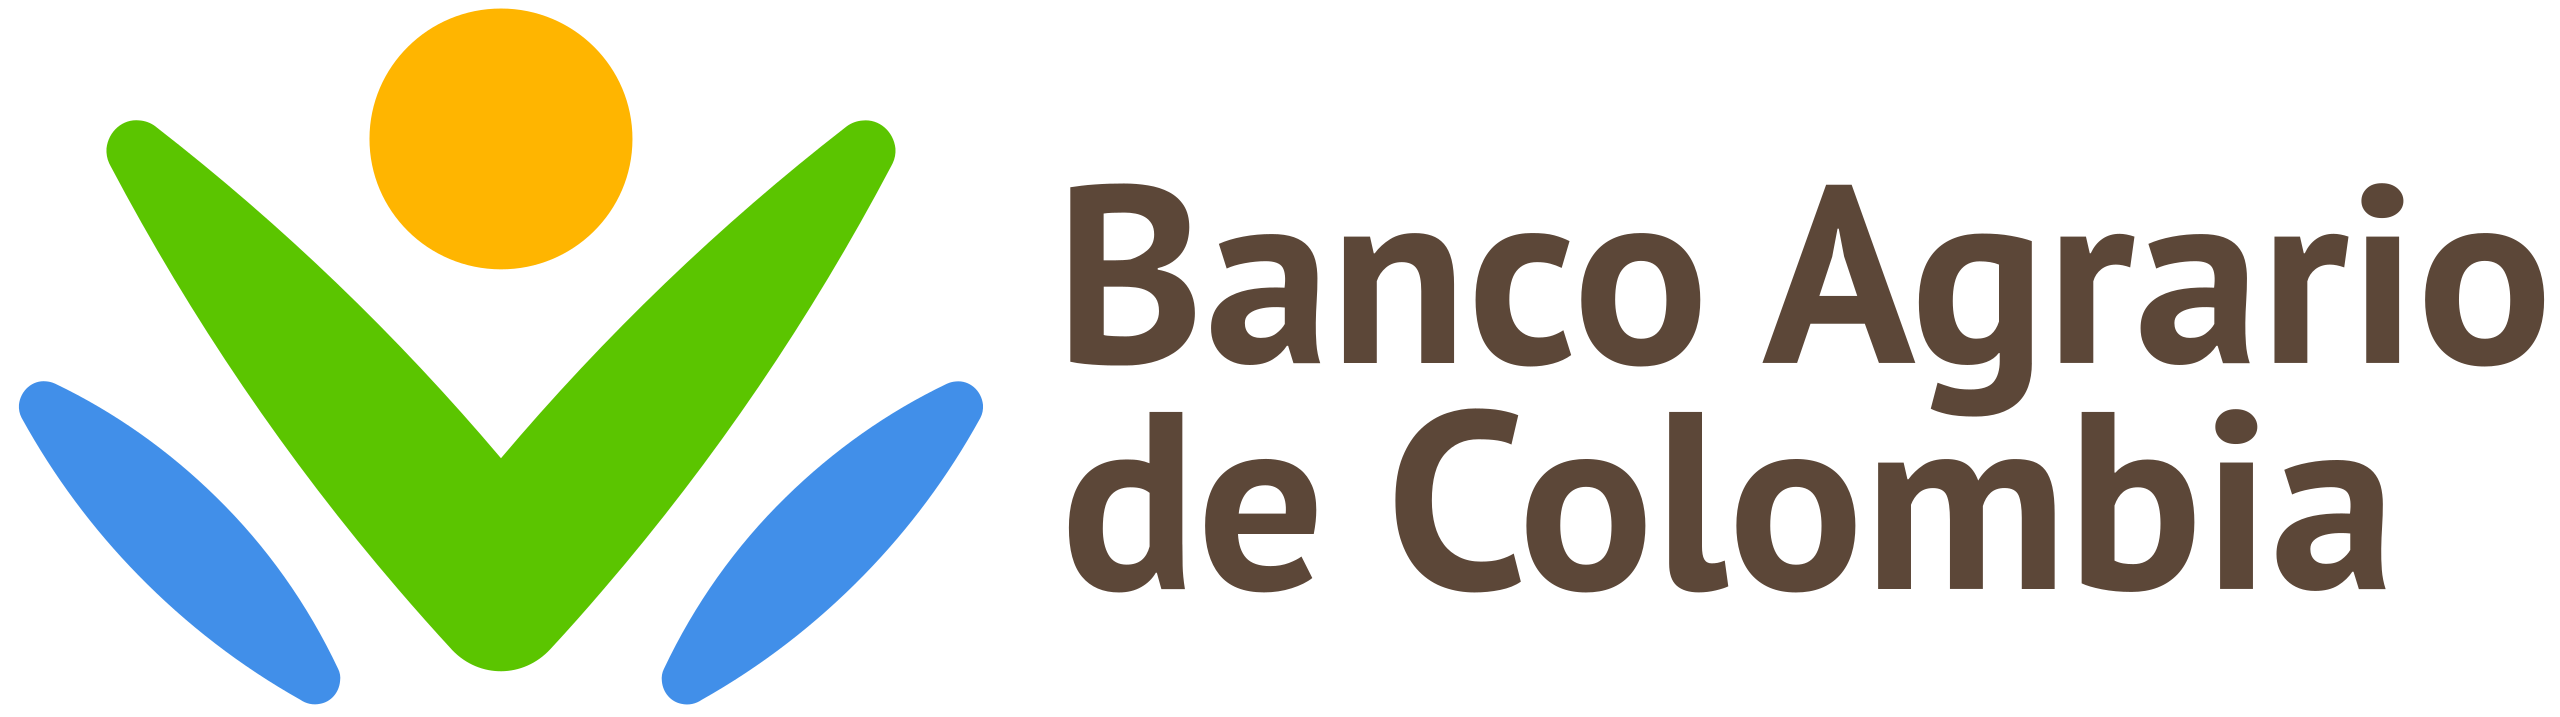 Banco_Agrario_de_Colombia_logo.svg